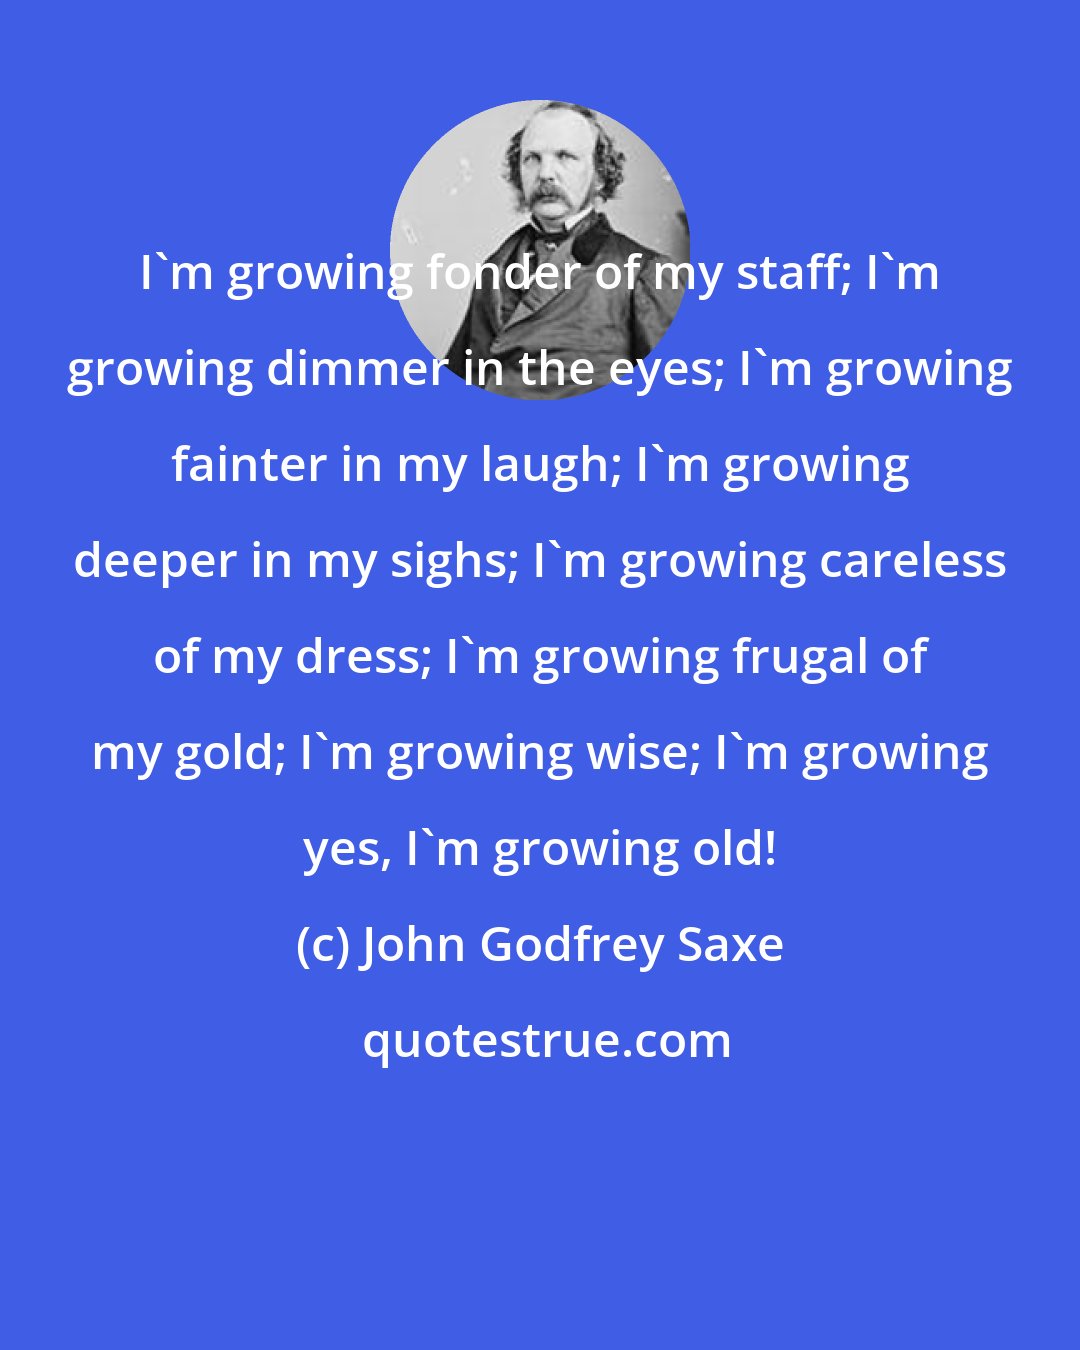 John Godfrey Saxe: I'm growing fonder of my staff; I'm growing dimmer in the eyes; I'm growing fainter in my laugh; I'm growing deeper in my sighs; I'm growing careless of my dress; I'm growing frugal of my gold; I'm growing wise; I'm growing yes, I'm growing old!